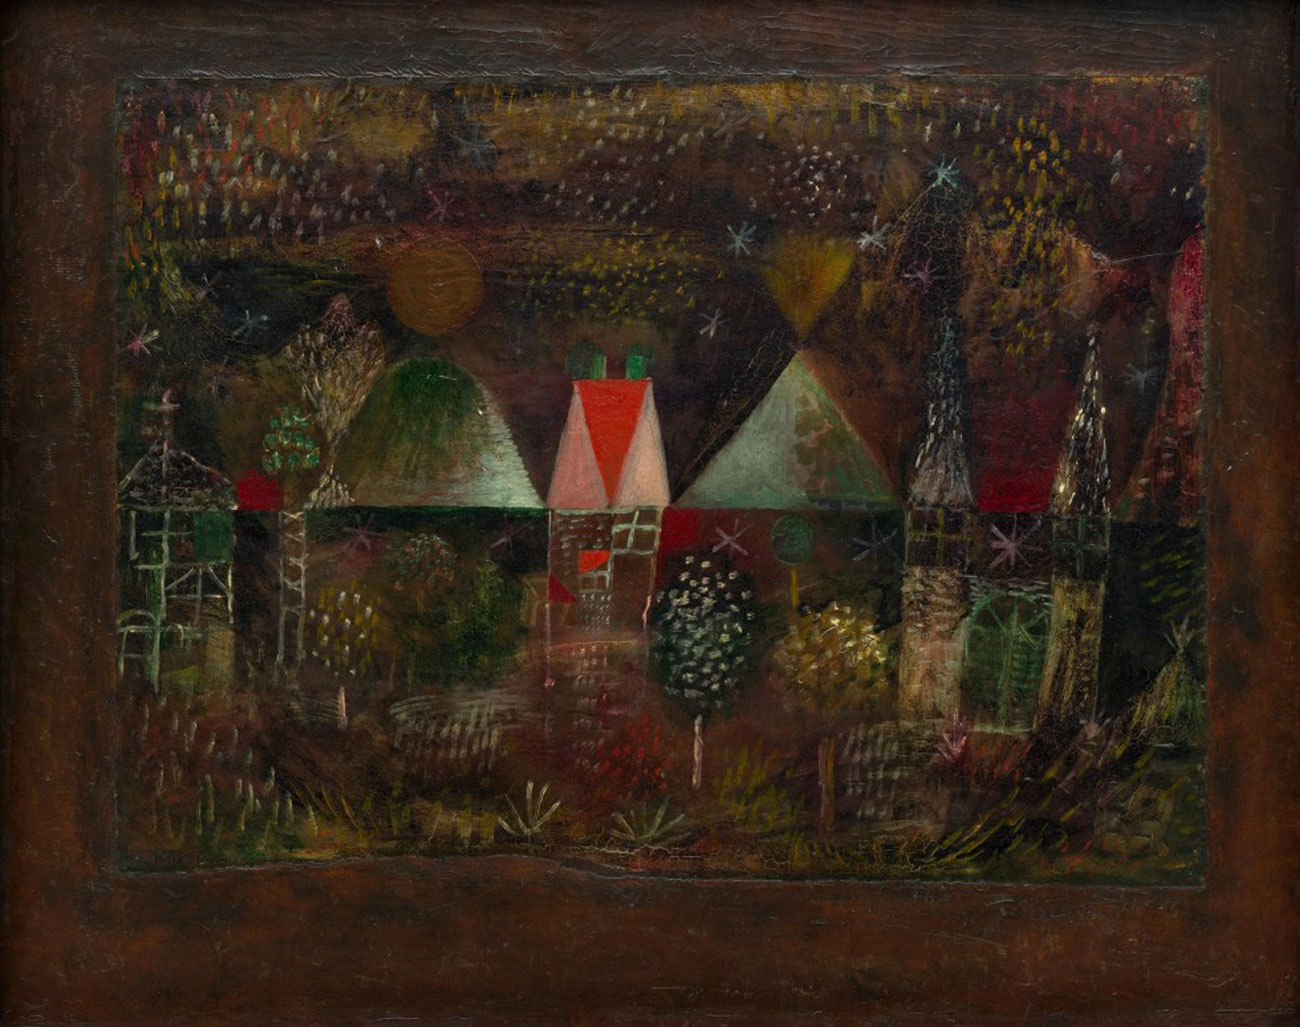 Nächtliches Fest by Paul Klee - 1921 - 36,9 x 49,8 cm Solomon R. Guggenheim Museum